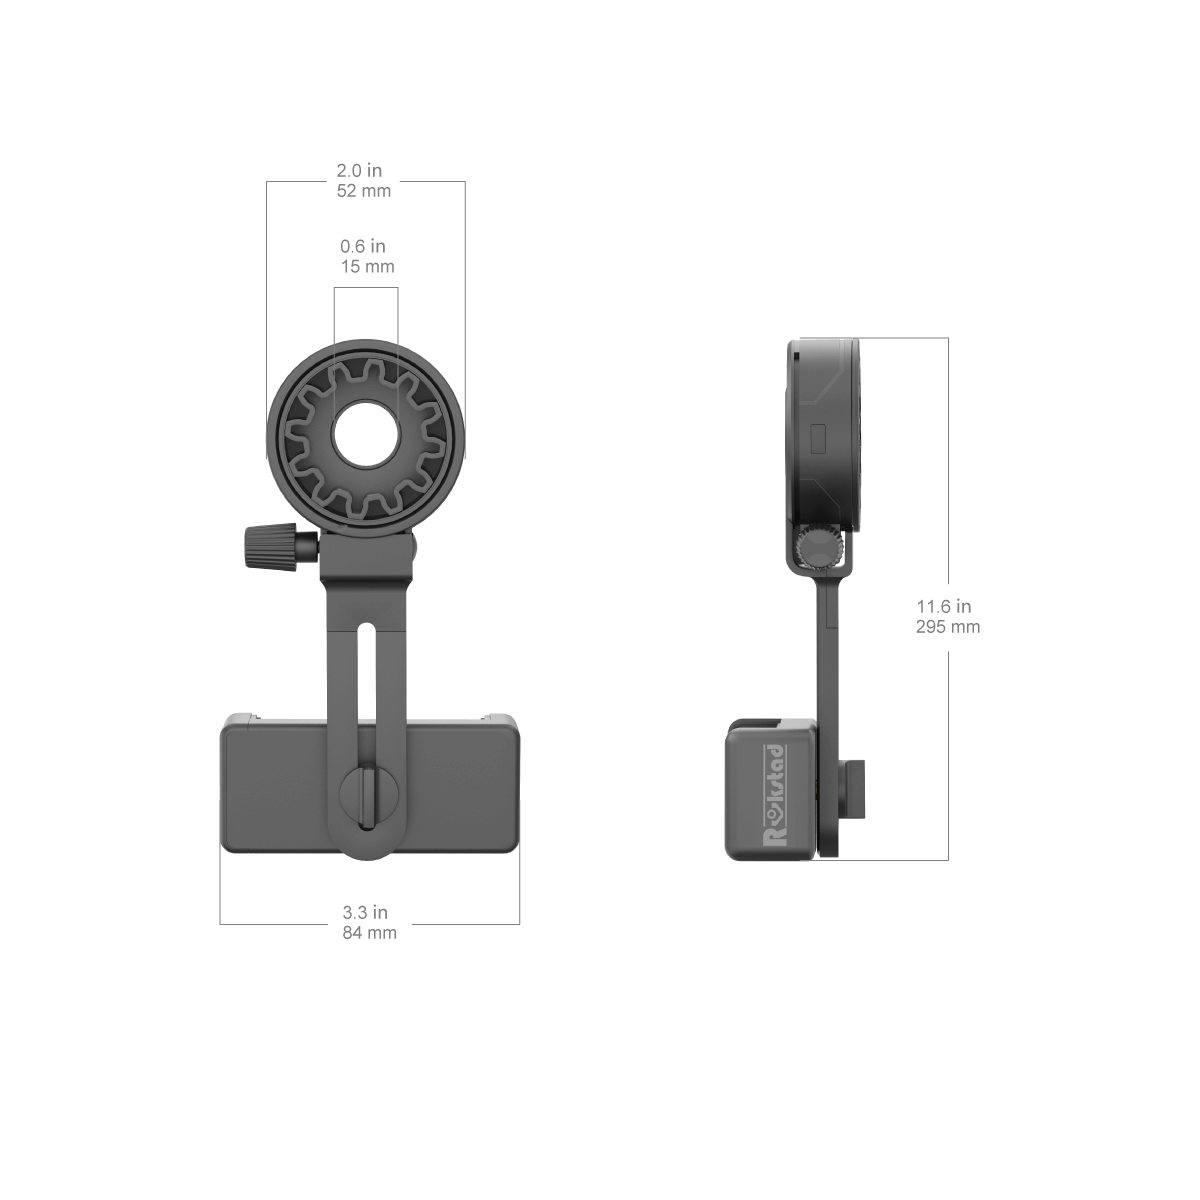 RSOA-01 Ocular Lens Cellphone Adapter Dimensions